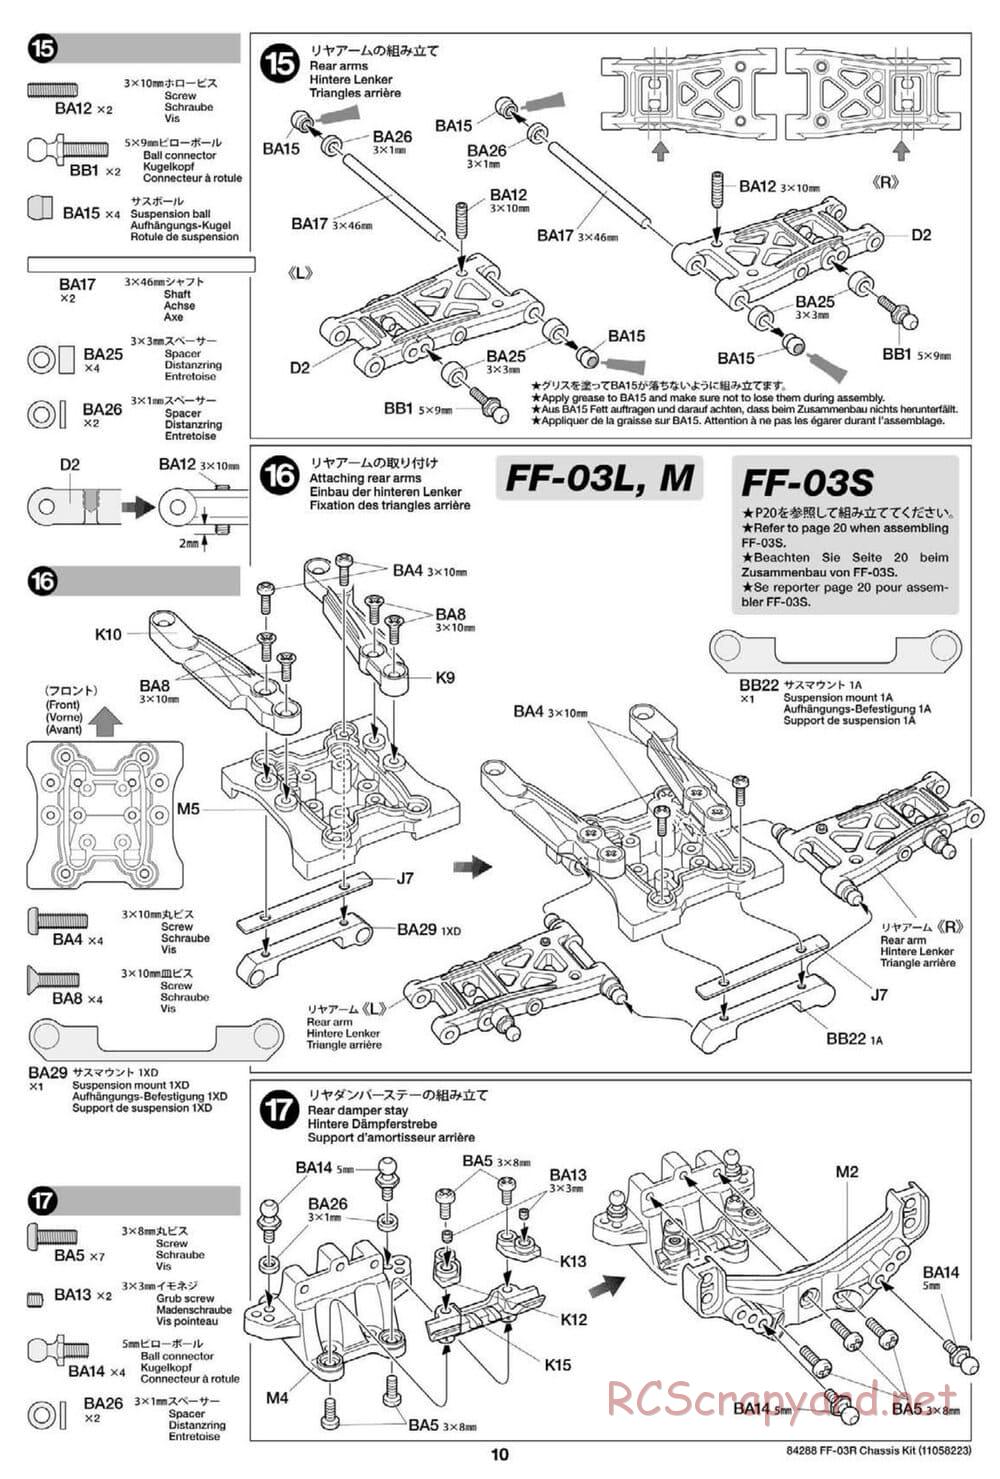 Tamiya - FF-03R Chassis - Manual - Page 12